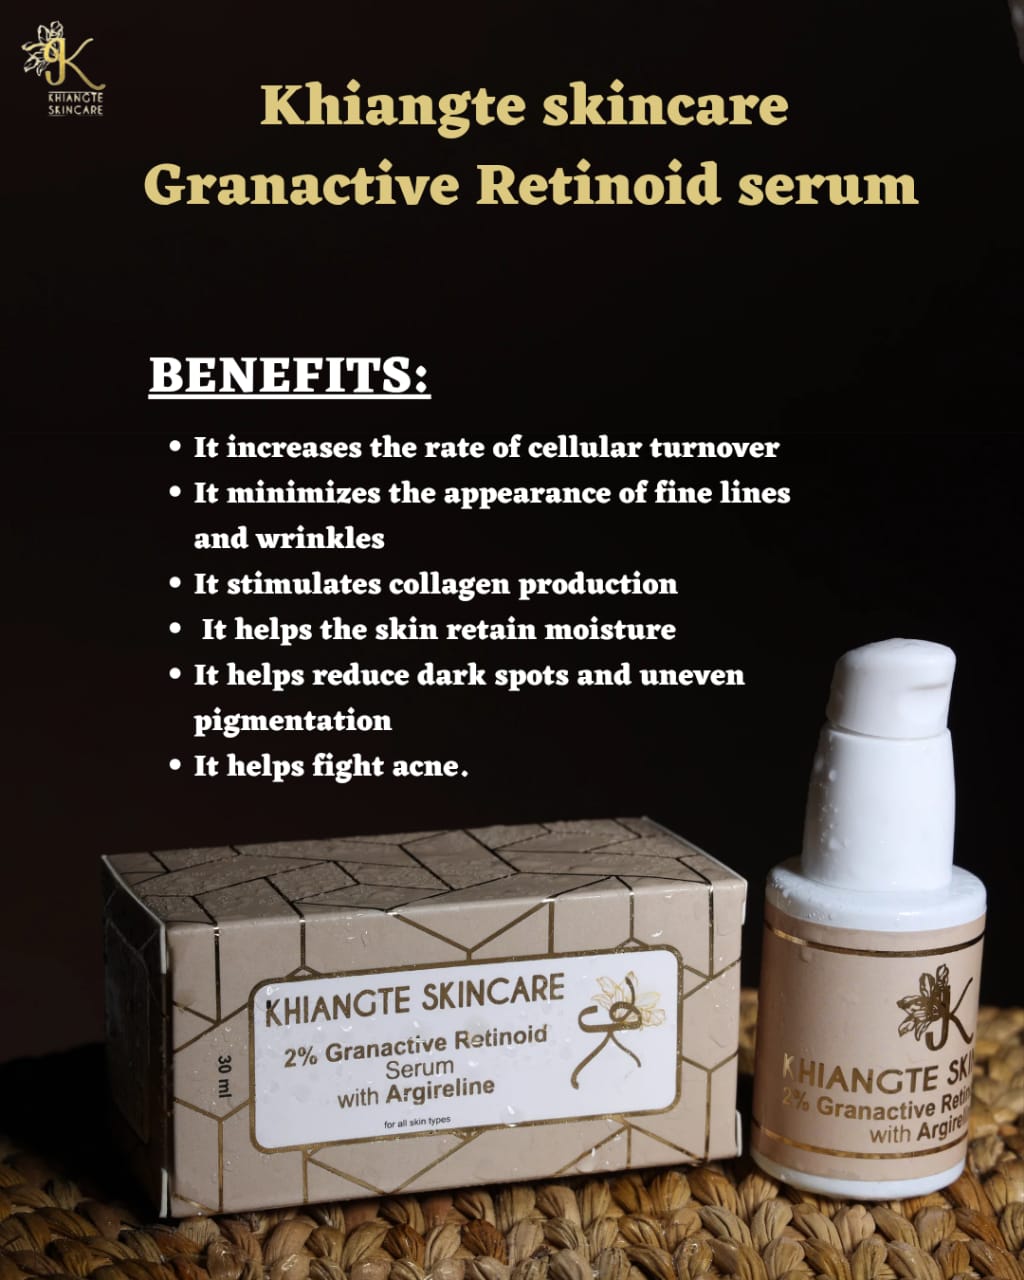 2% Granactive Retinoid with Argireline